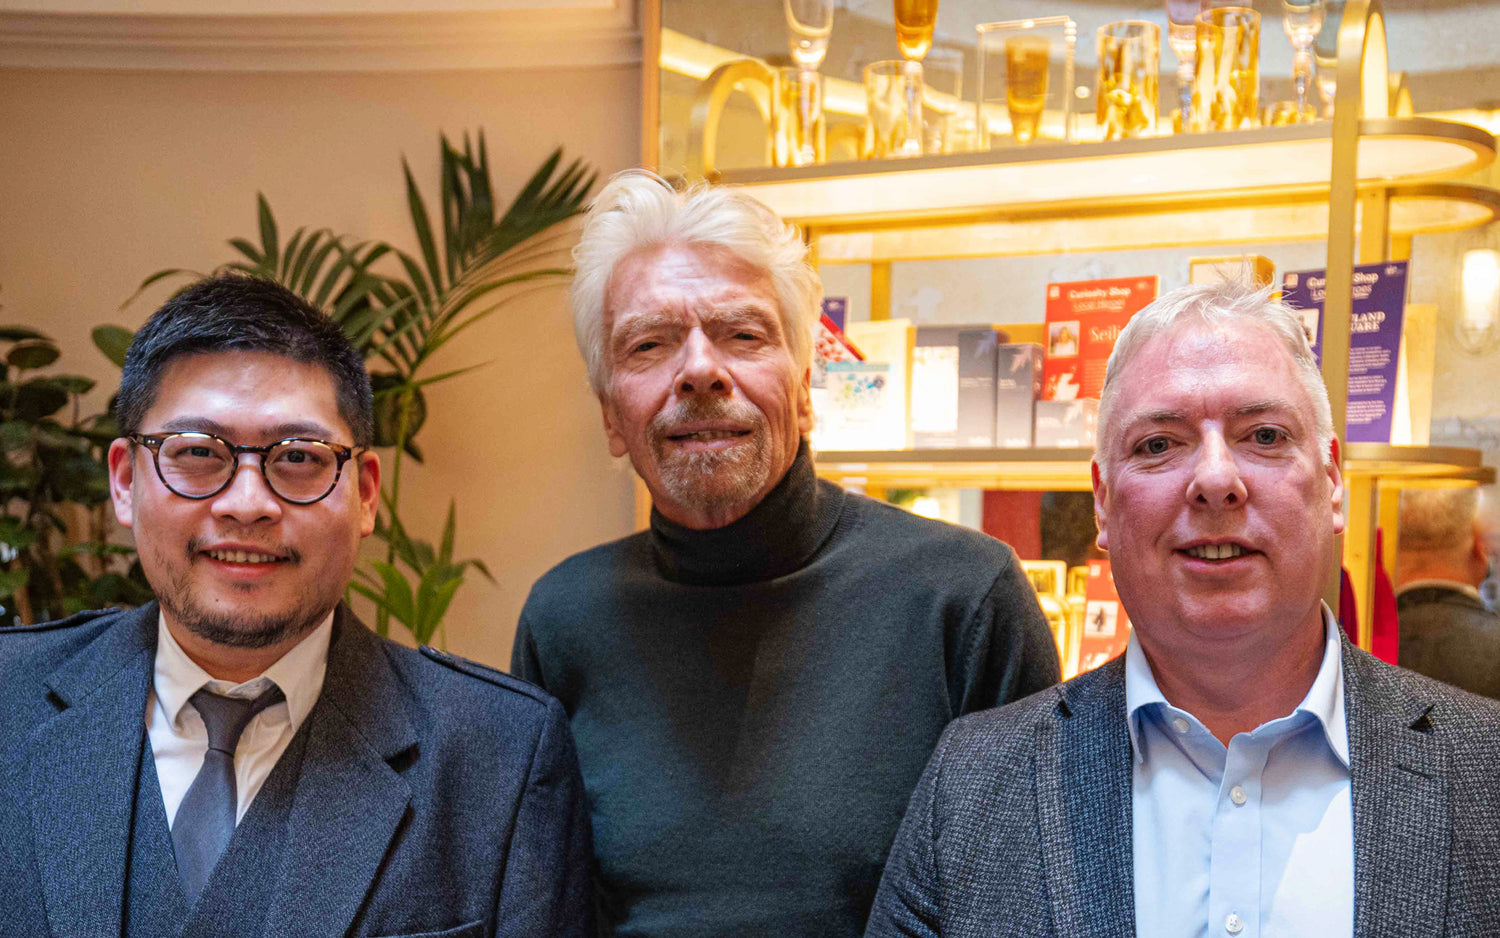 Project Harmless Co-Founders George Greer and Ka Ho Wong meeting Sir Richard Branson